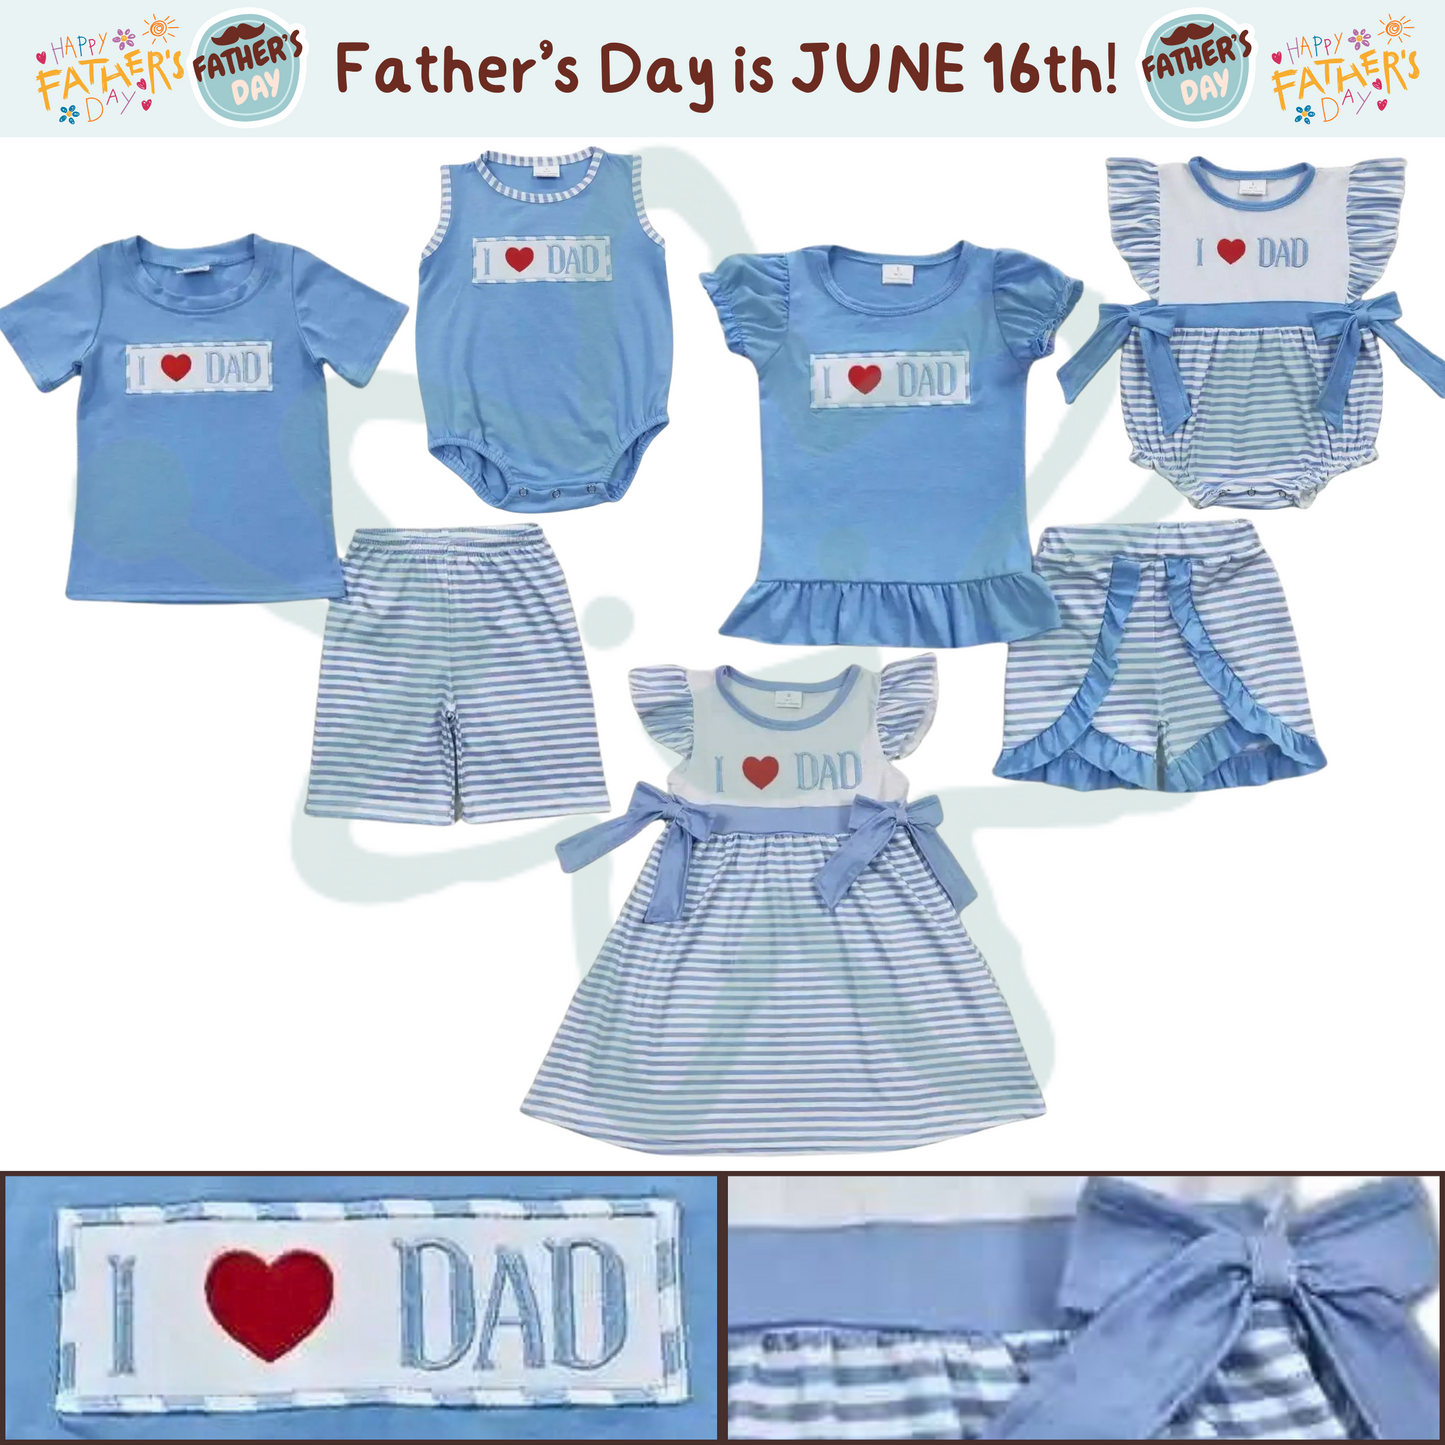 I Love Dad - Blue Striped Father's Day Girls Dress